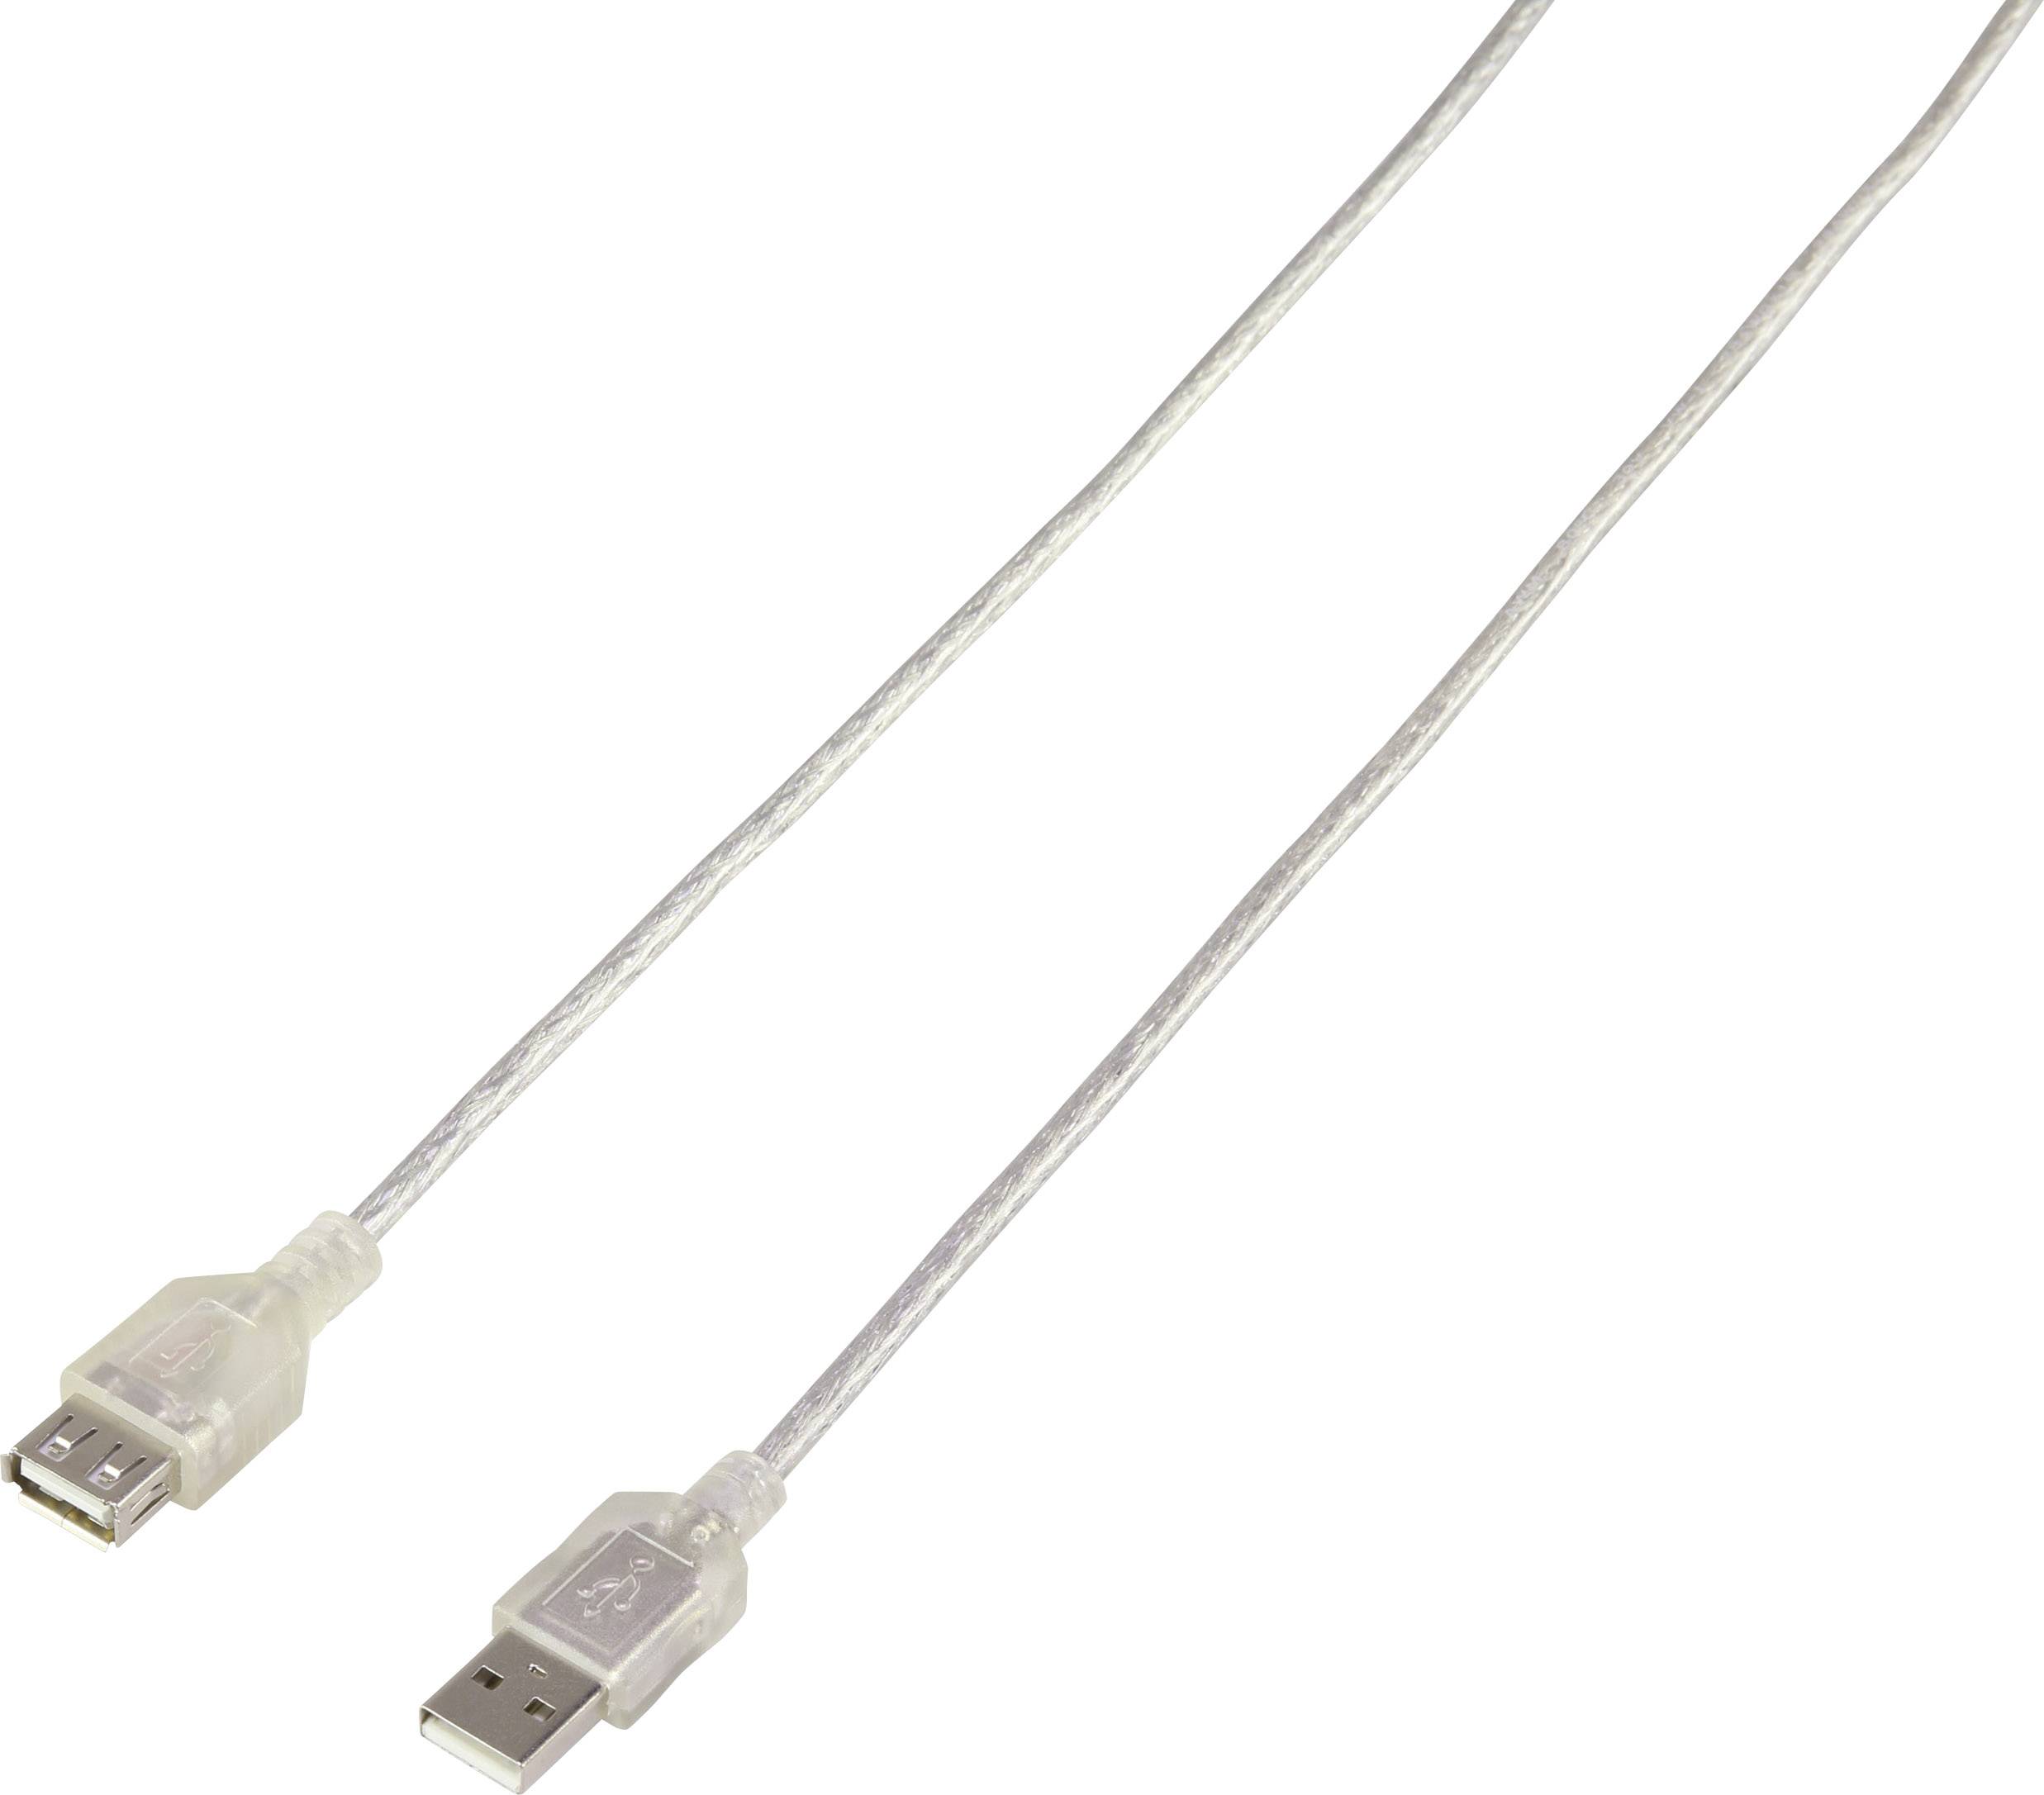 CONRAD Renkforce USB 2.0 Anschlusskabel [1x USB 2.0 Stecker A - 1x USB 2.0 Buchse A] 3.00 m Durchsic